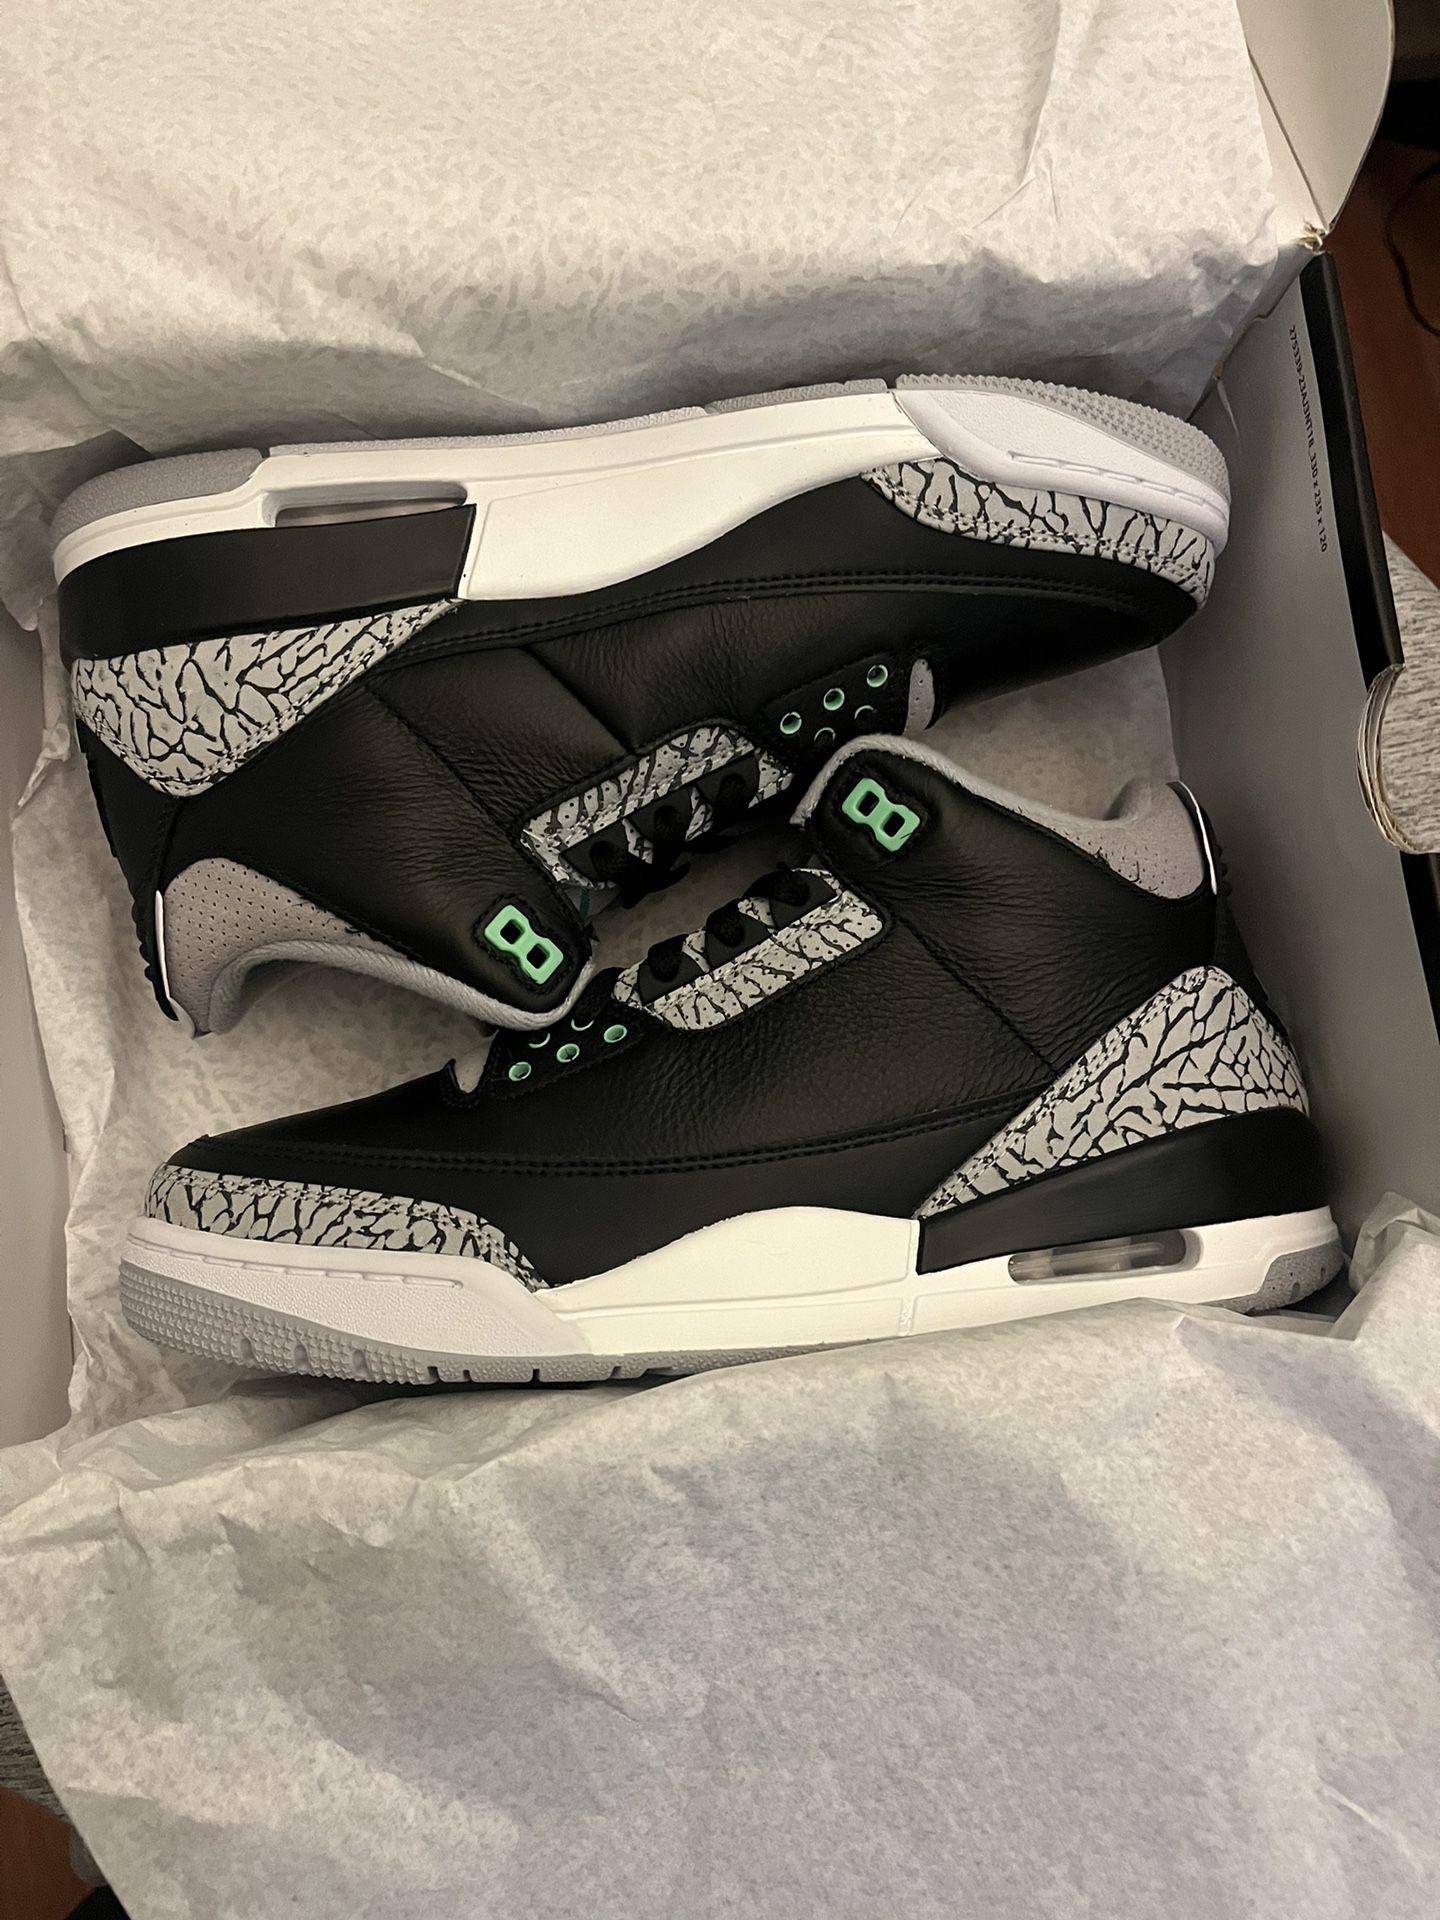 Air Jordan 3 Retro Green Glow - Size 9 Men’s - Brand New